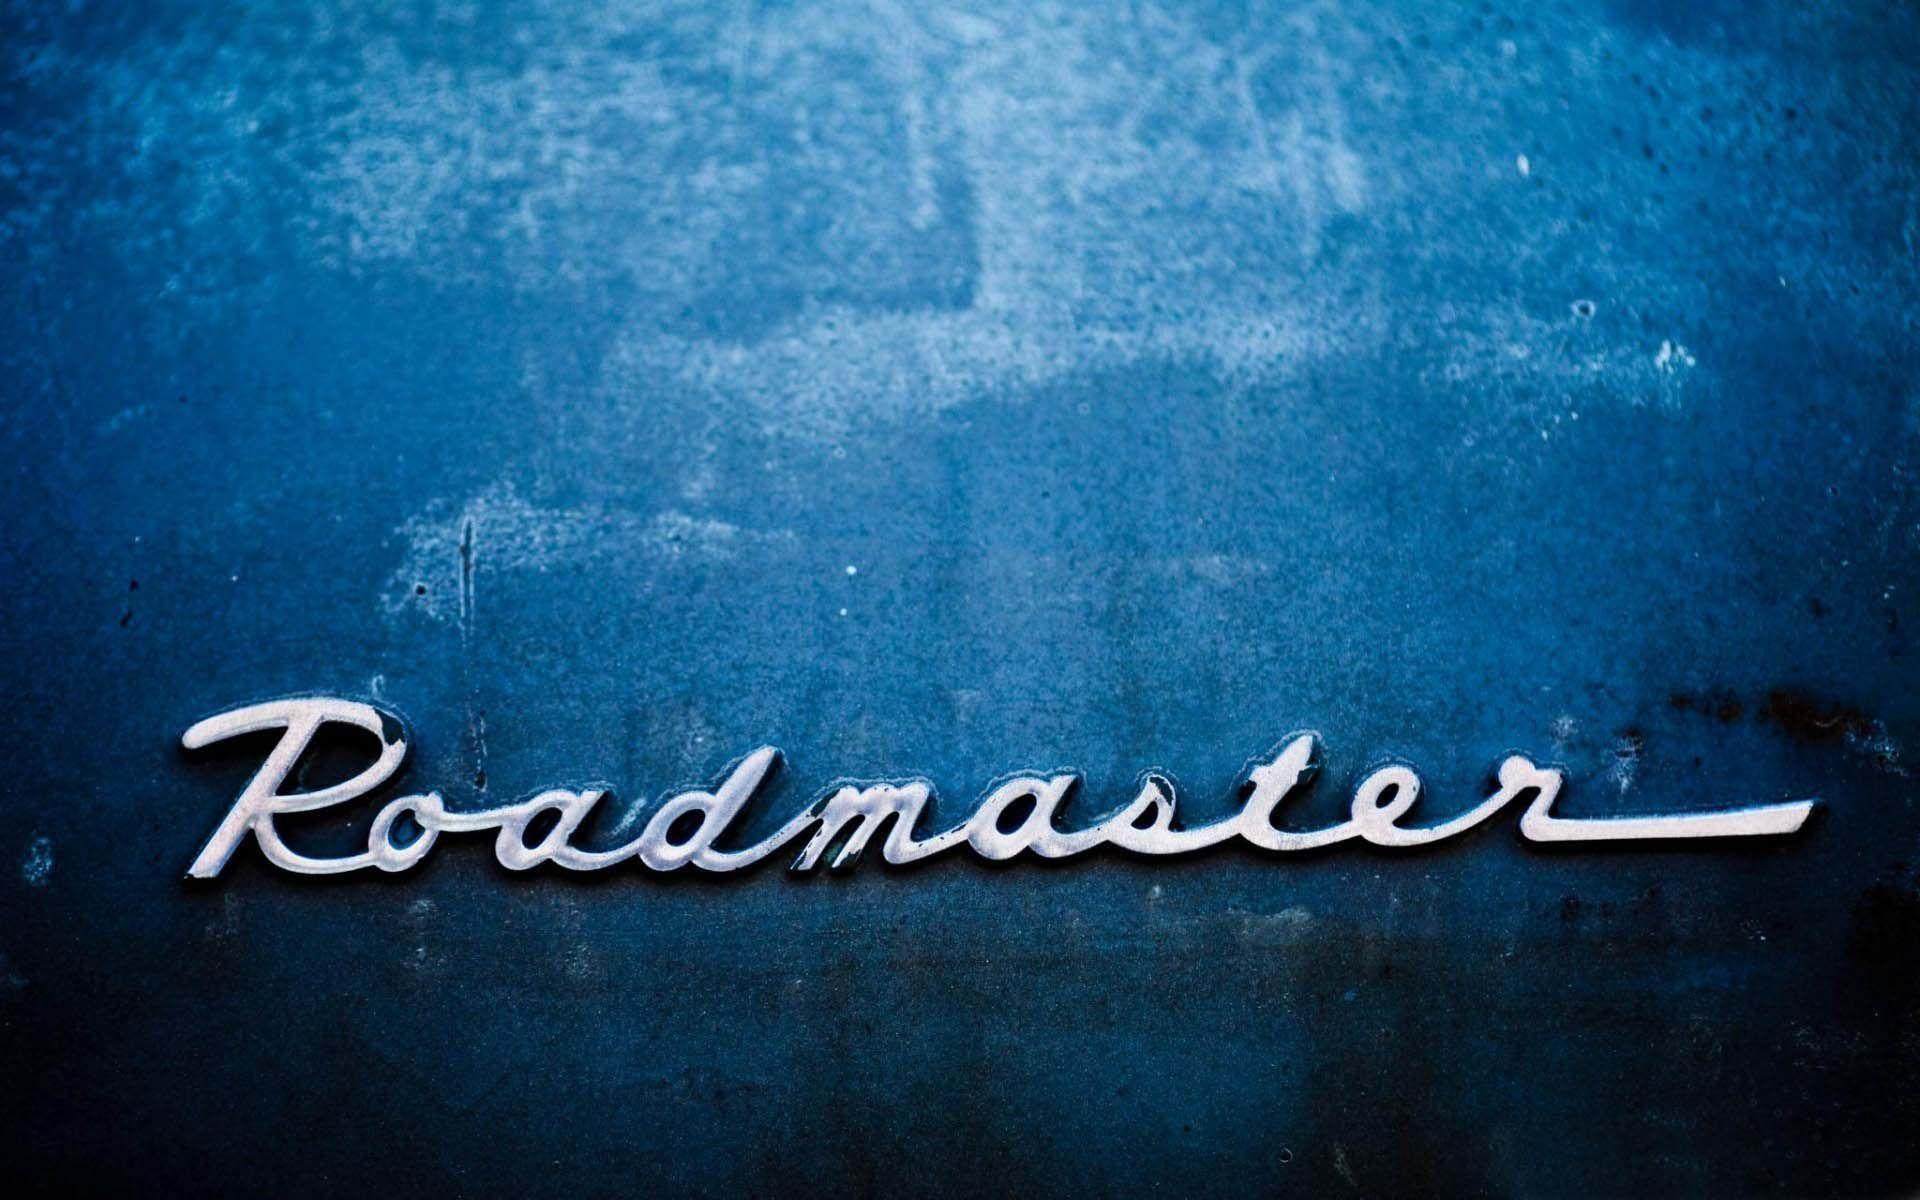 Roadmaster Car Logo Wallpaper. HD Brands and Logos Wallpaper